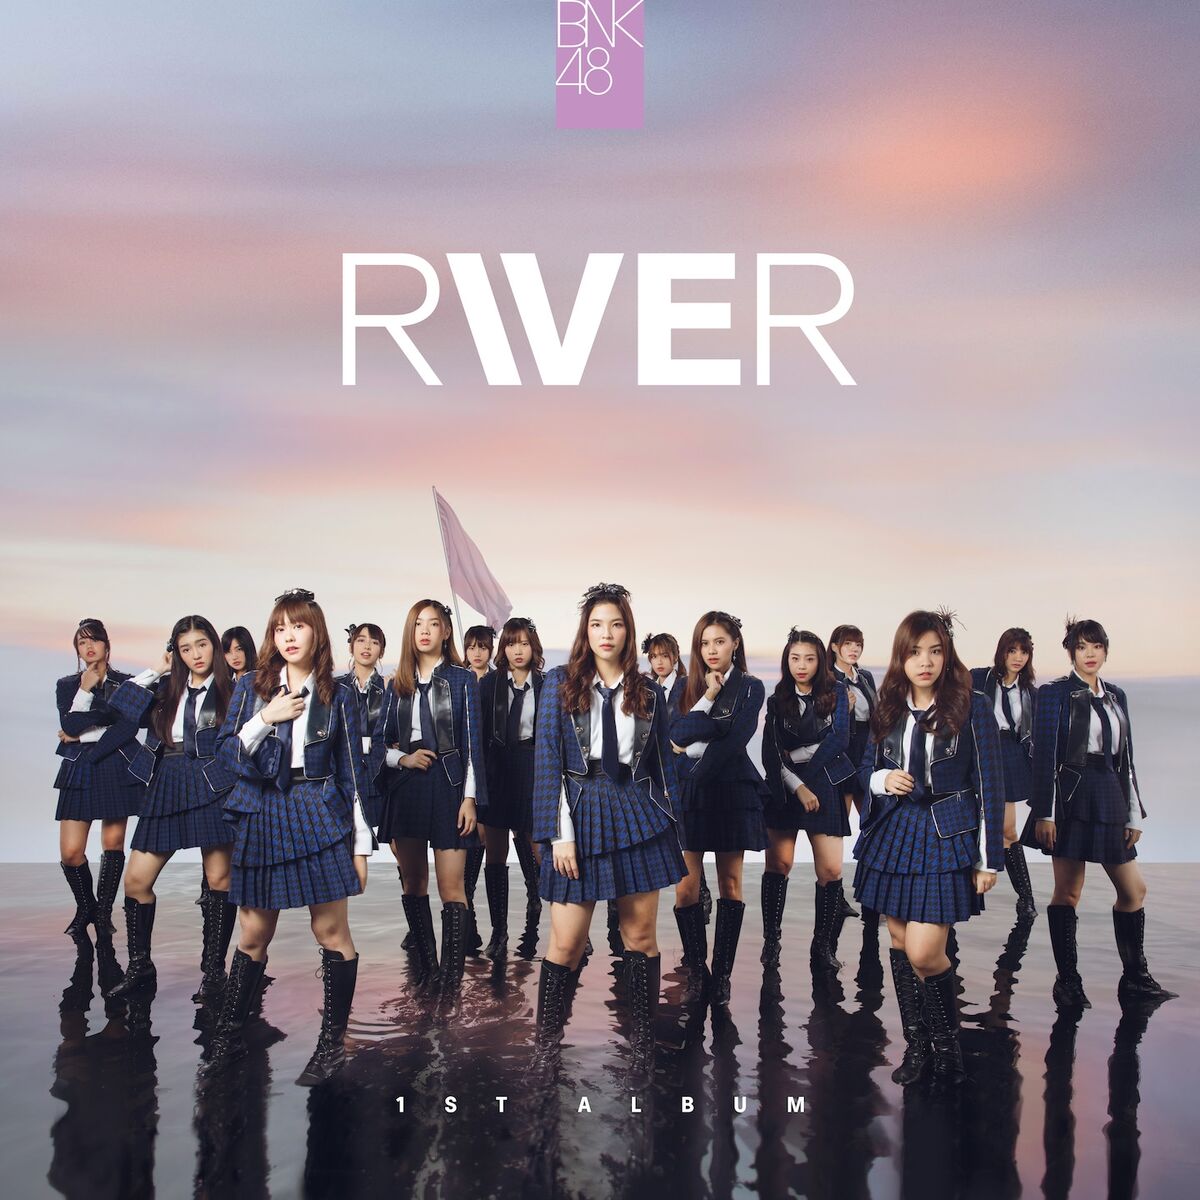 RIVER (BNK48 Song) | AKB48 Wiki | Fandom